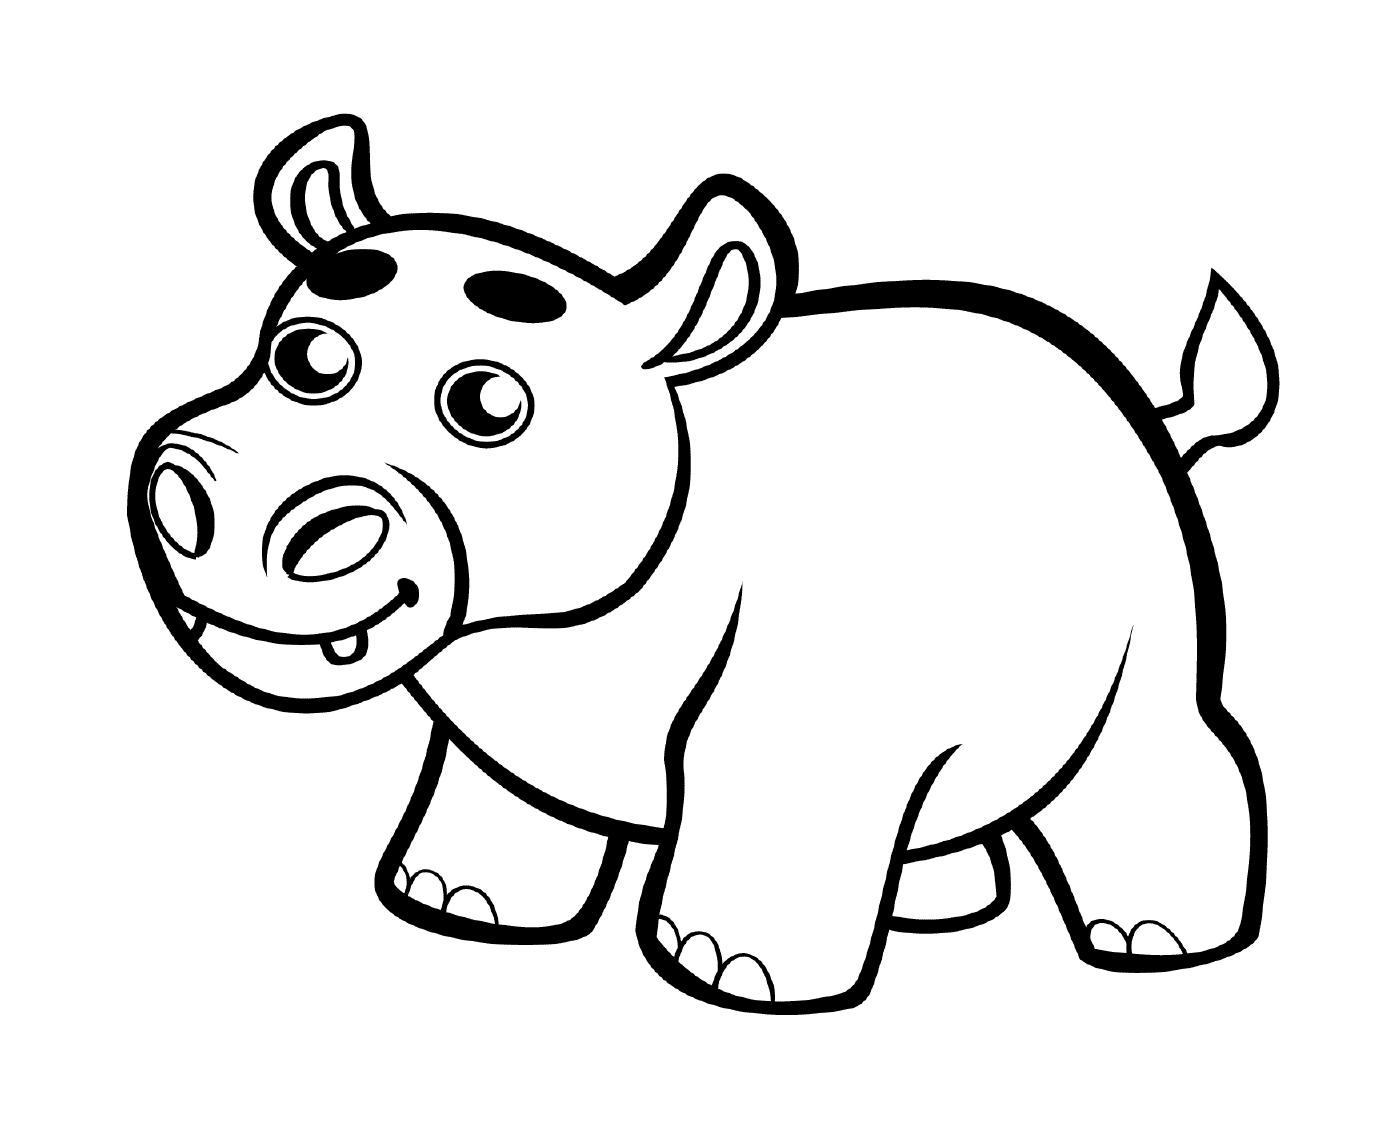  A hippopotamus baby 